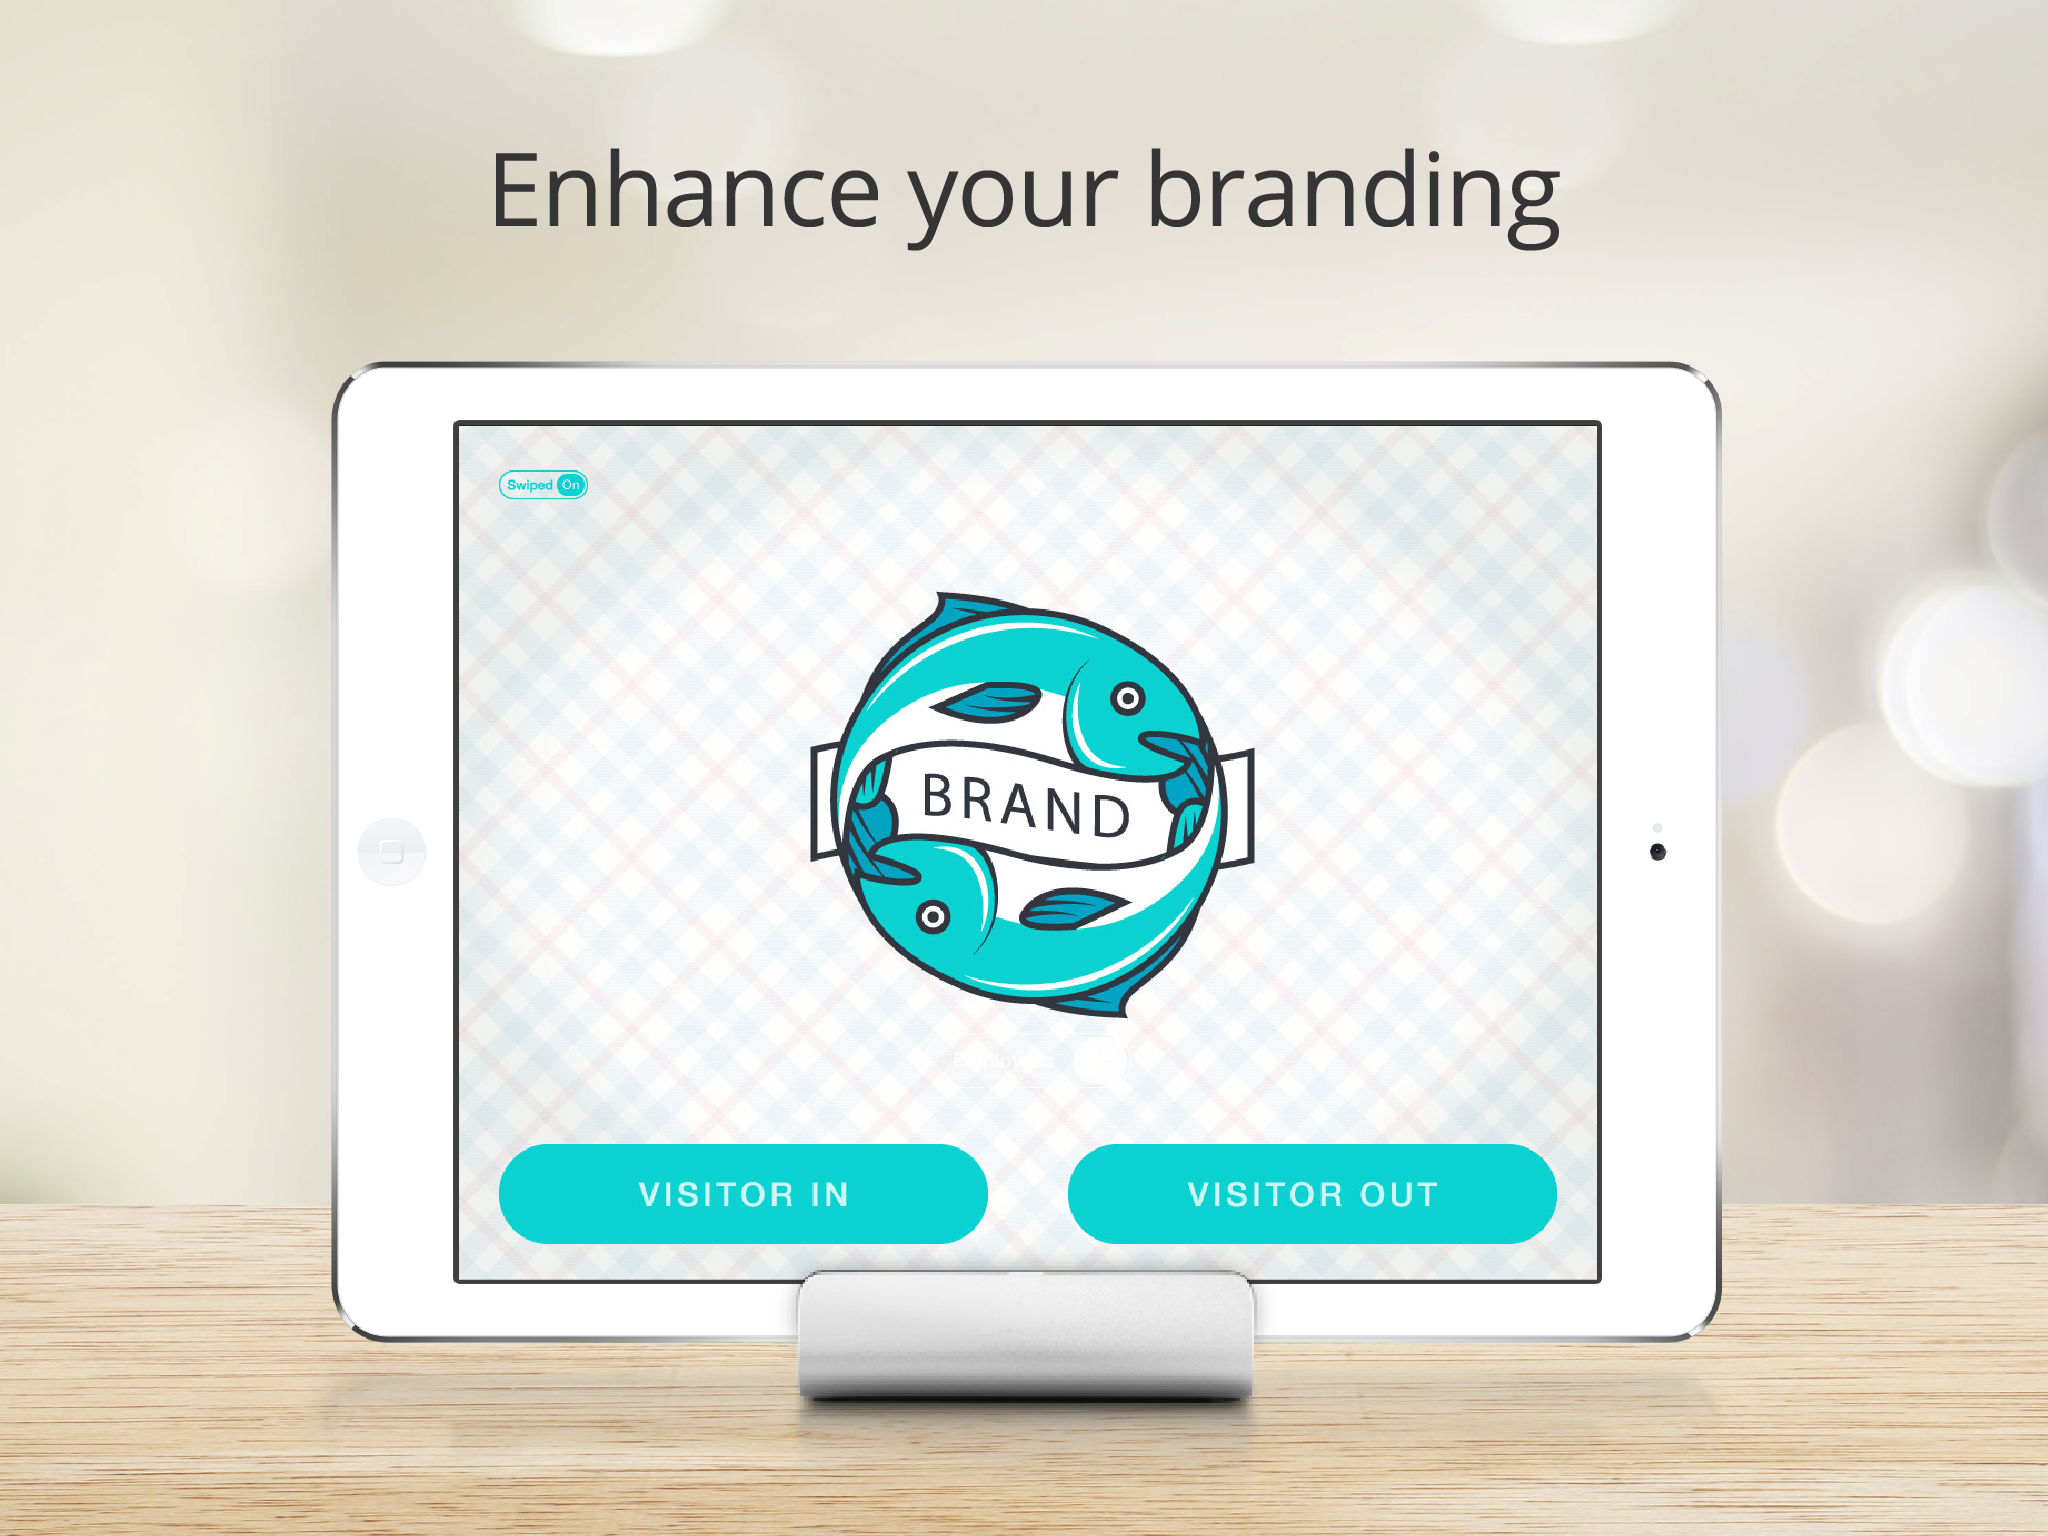 SwipedOn2_2 Enhance your branding 2@2x.png